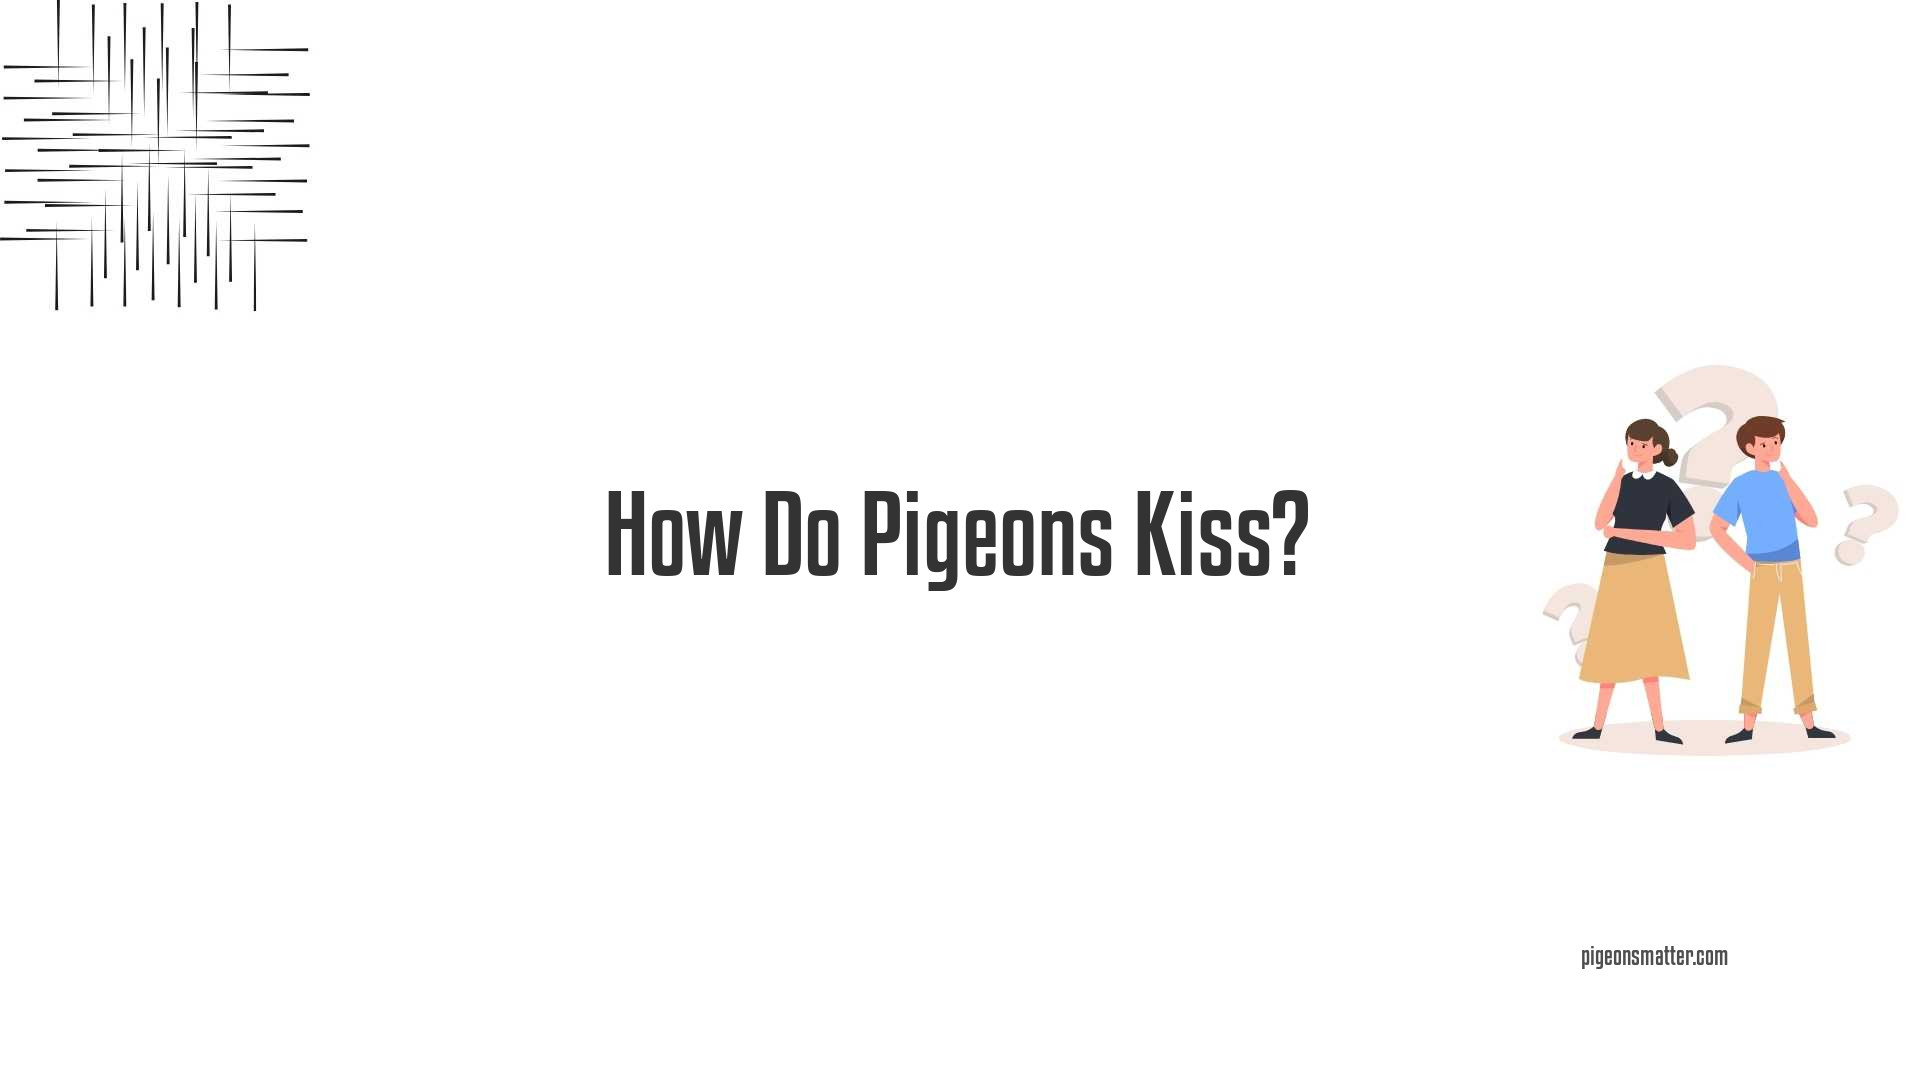 How Do Pigeons Kiss?